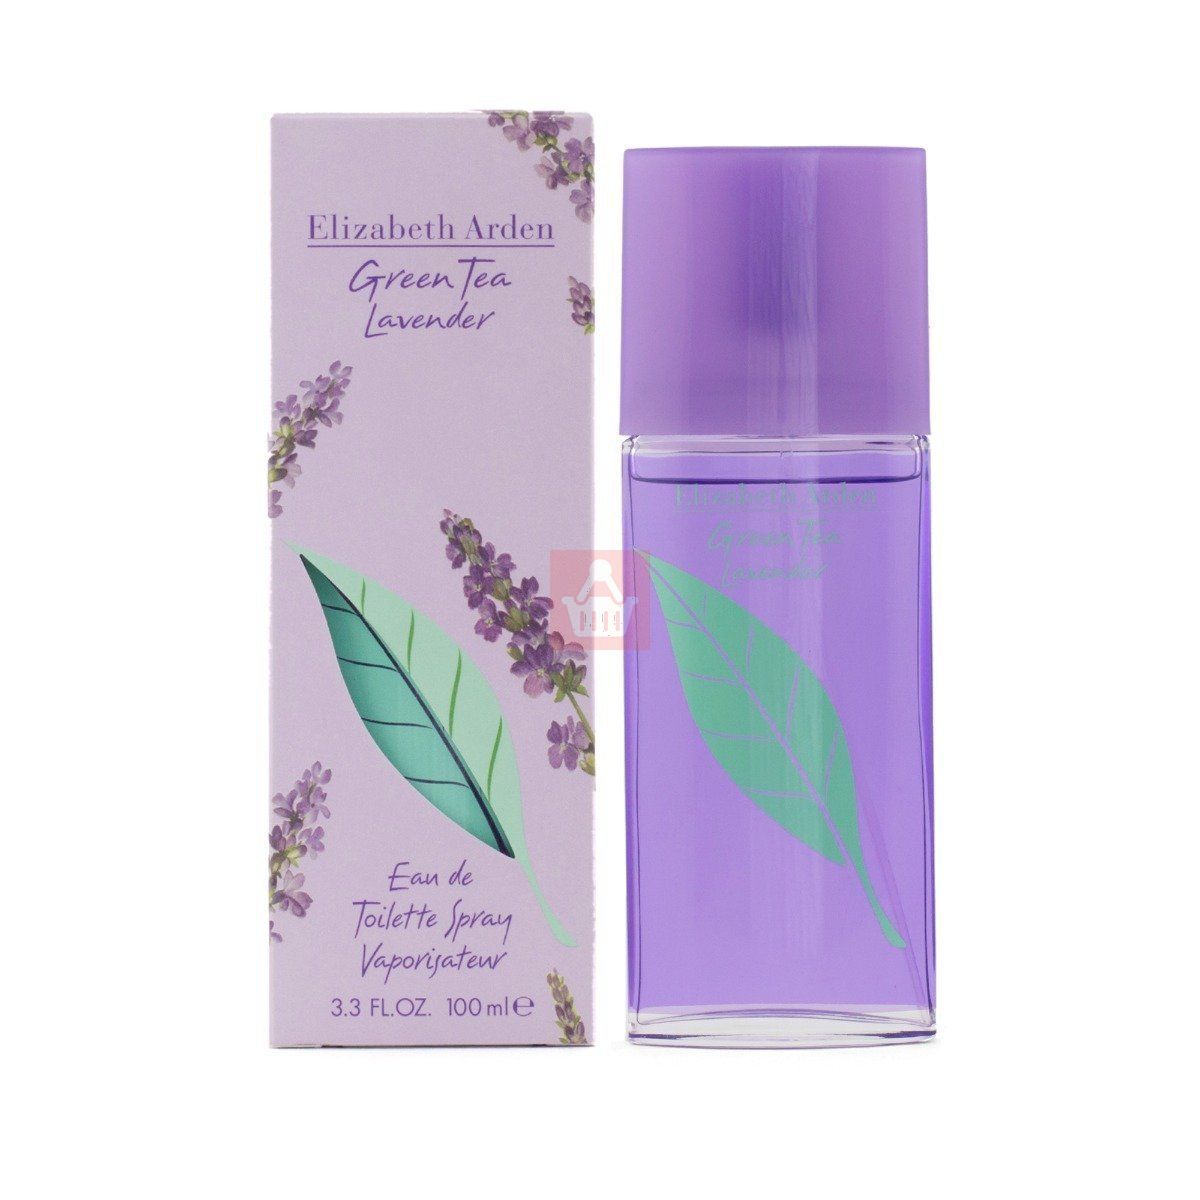 Elizabeth Arden Green Tea Scent Spray Eau Parfumée 100ml (3.38fl oz)